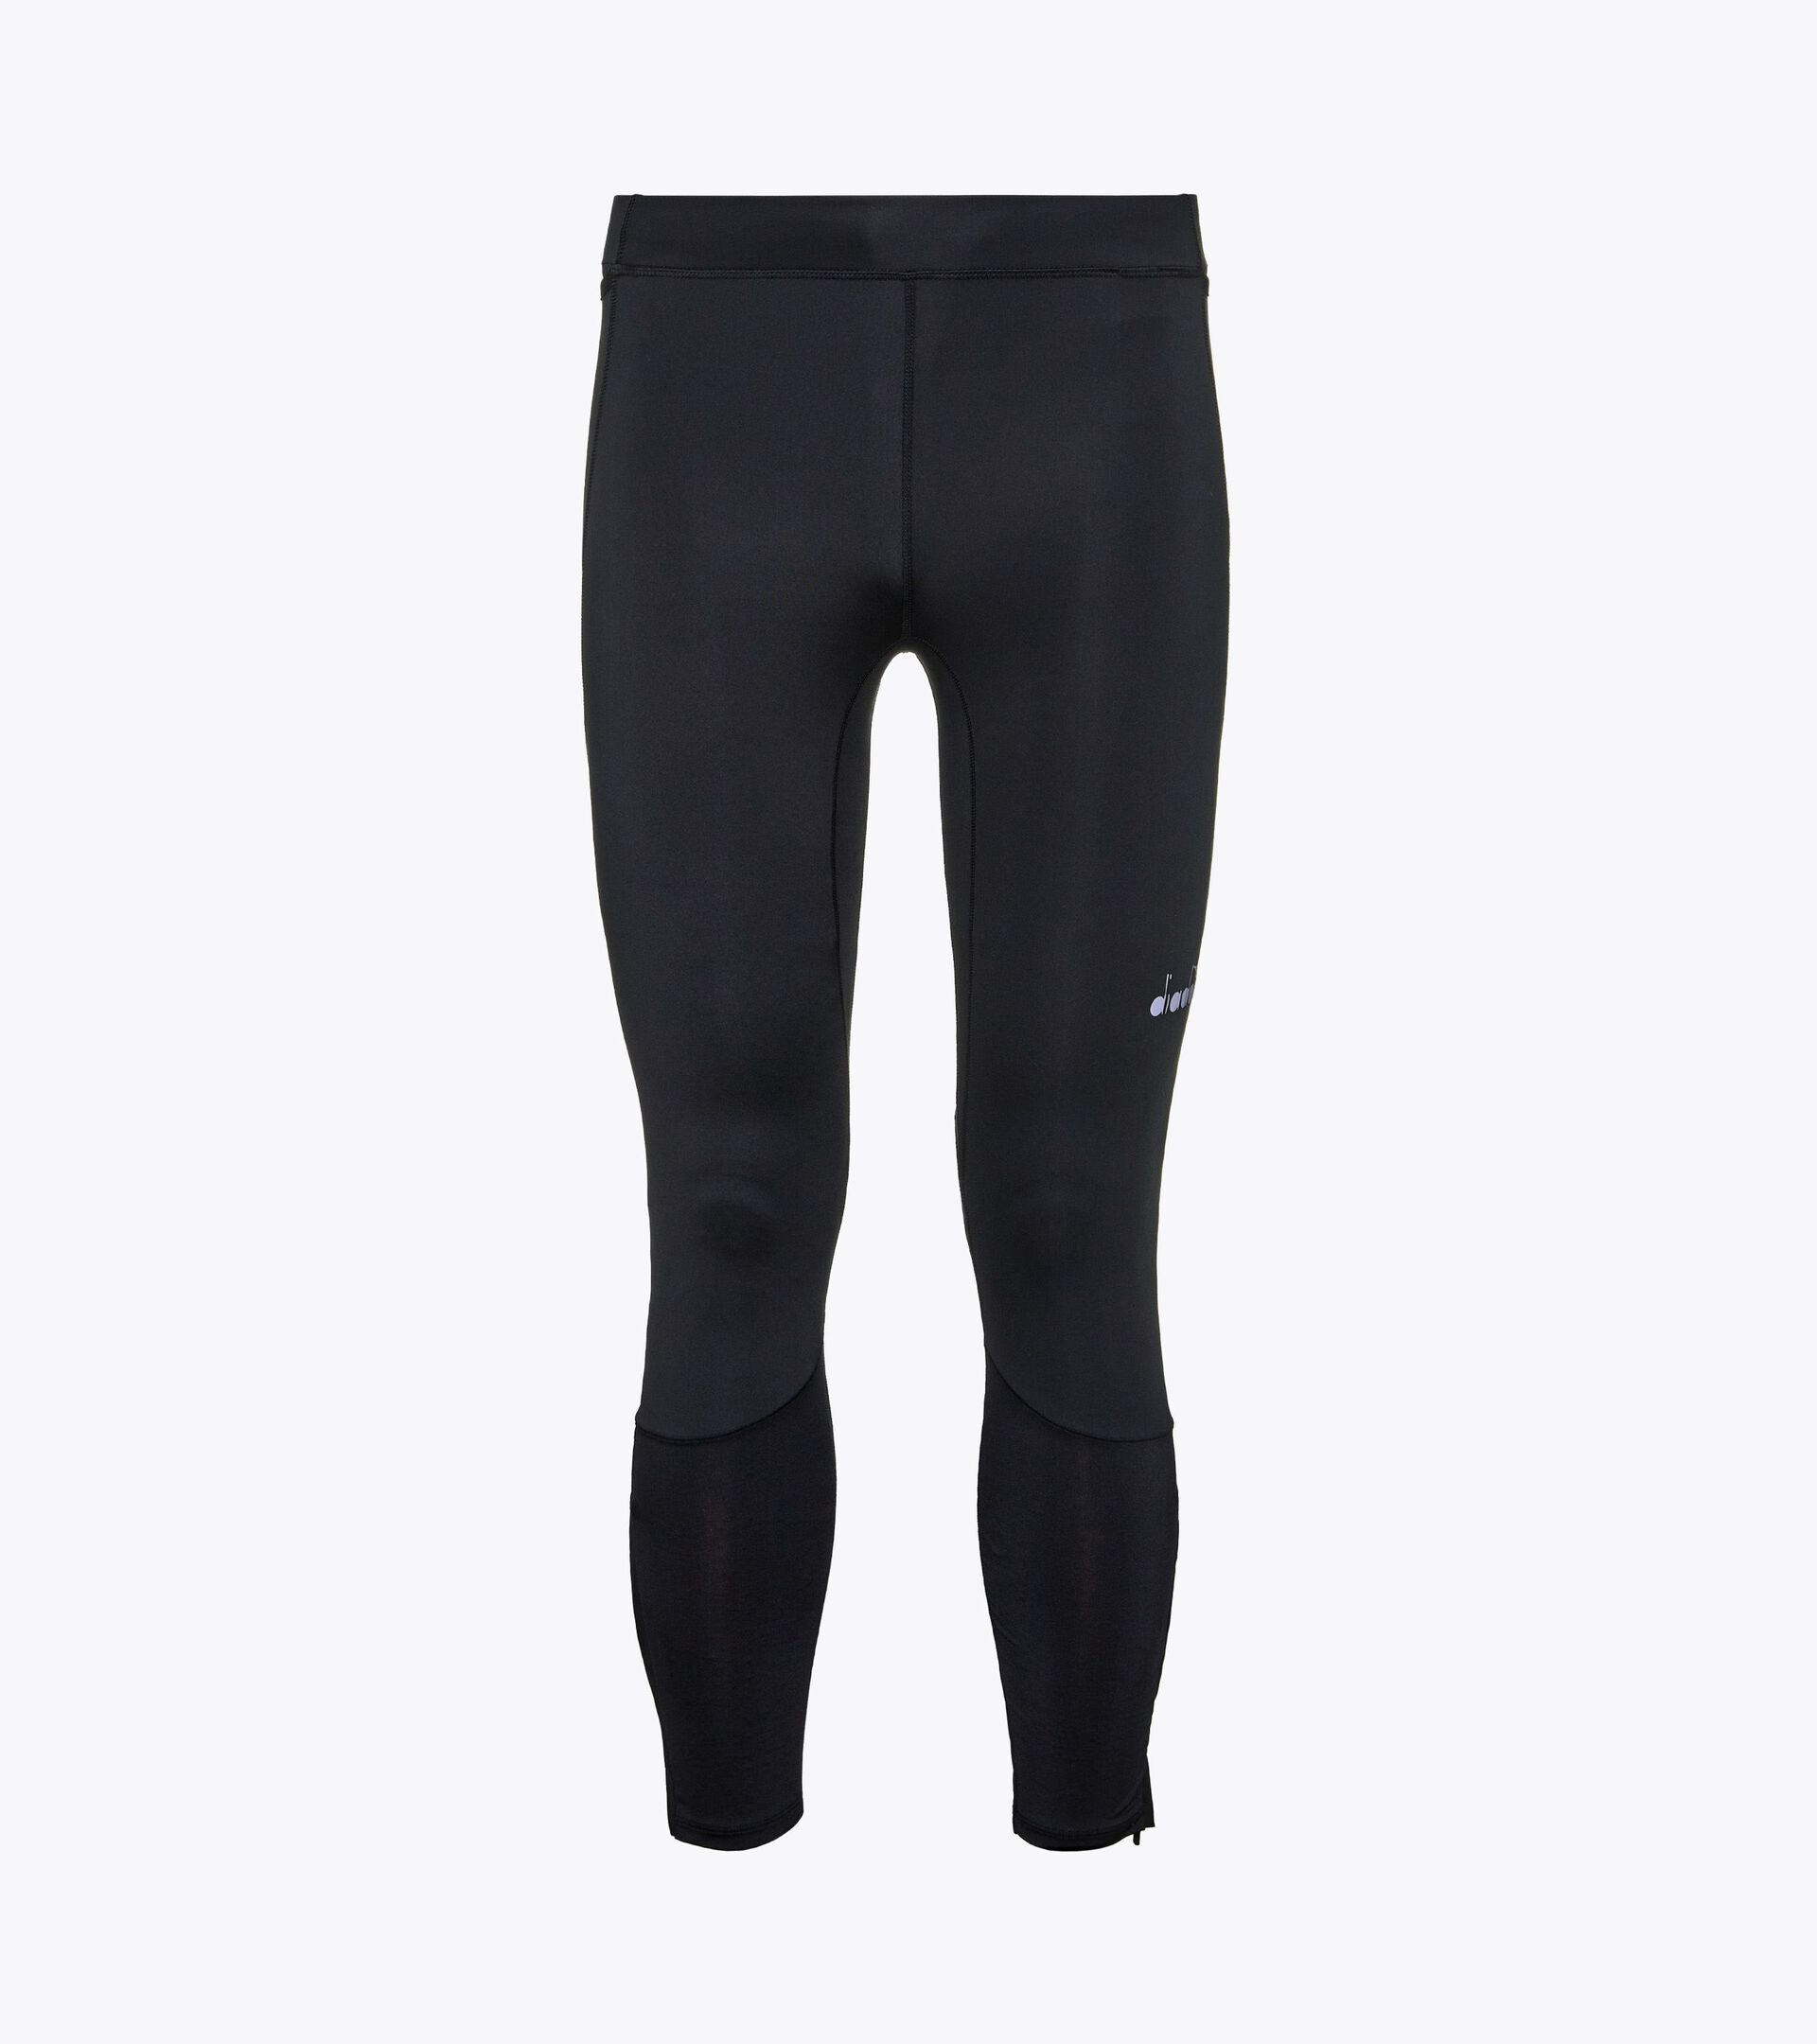 RUN TIGHTS WINTER PROTECTION Sports leggings - Men - Diadora Online Store US